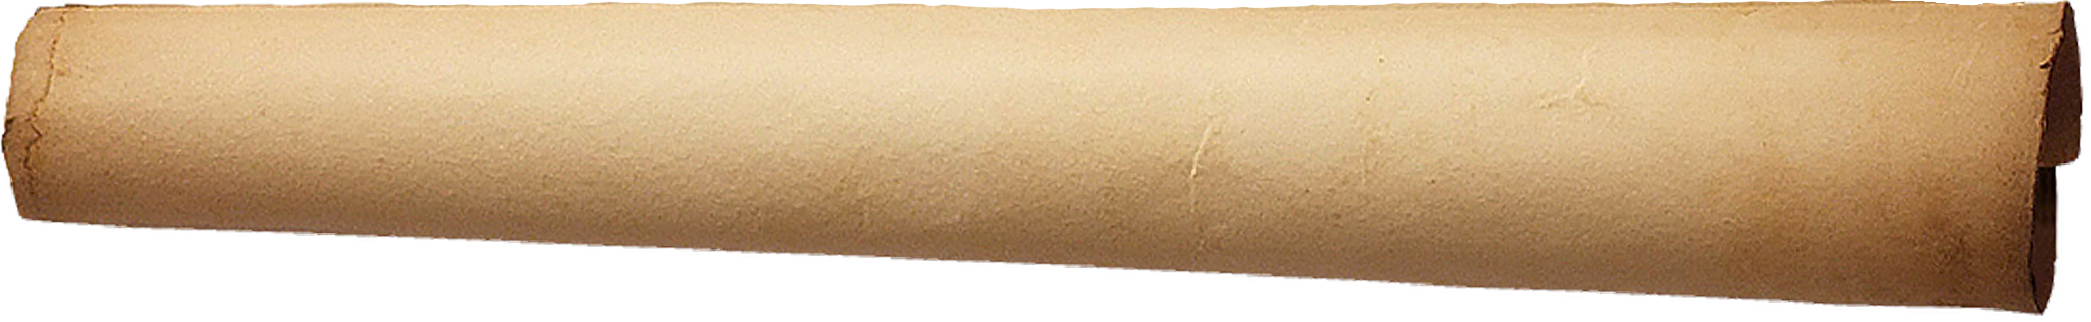 bottom of paper scroll